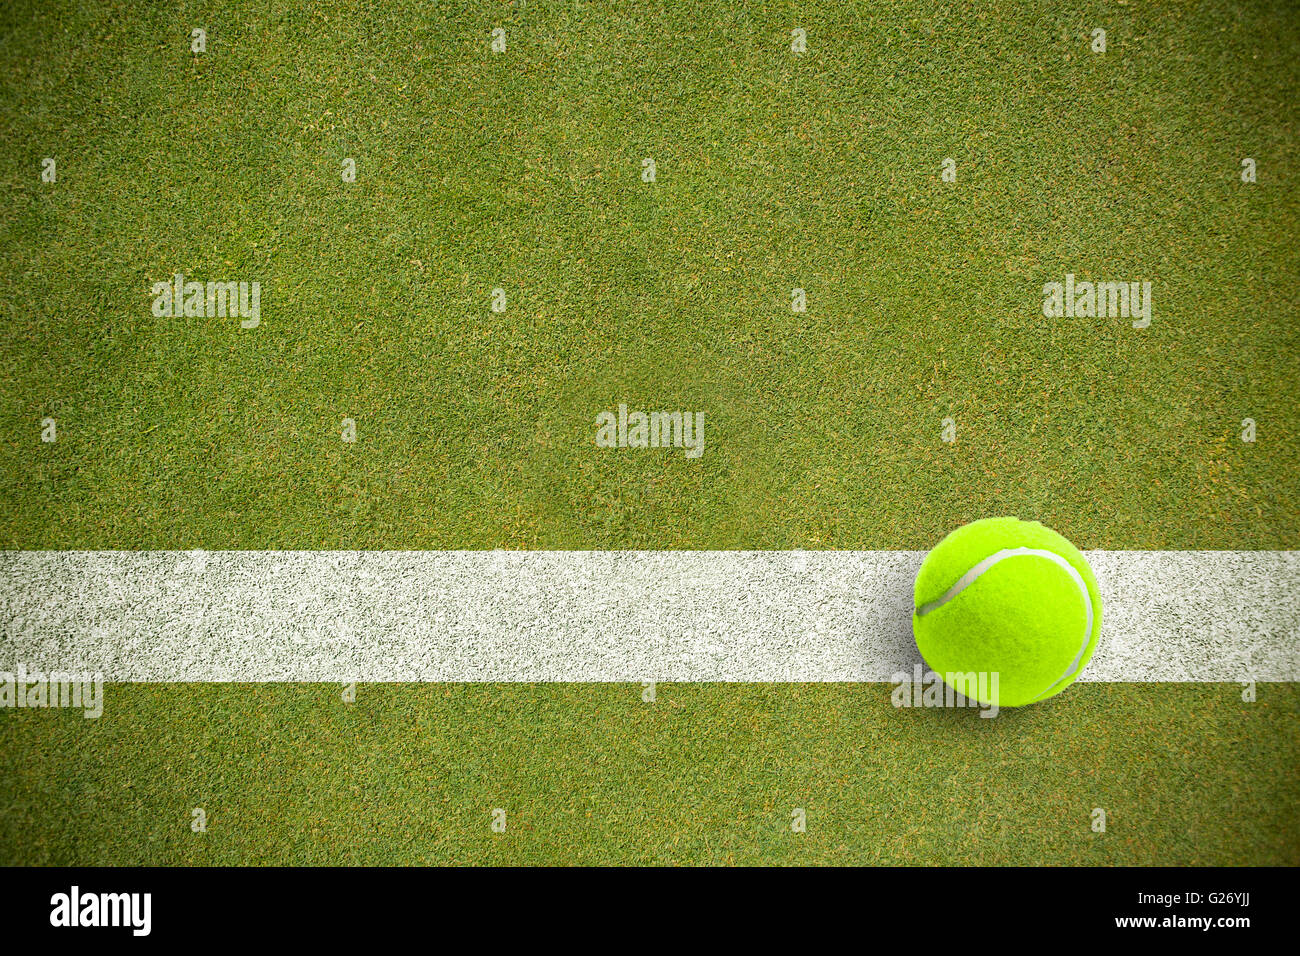 Imagen compuesta de pelota de tenis con una jeringa Foto de stock